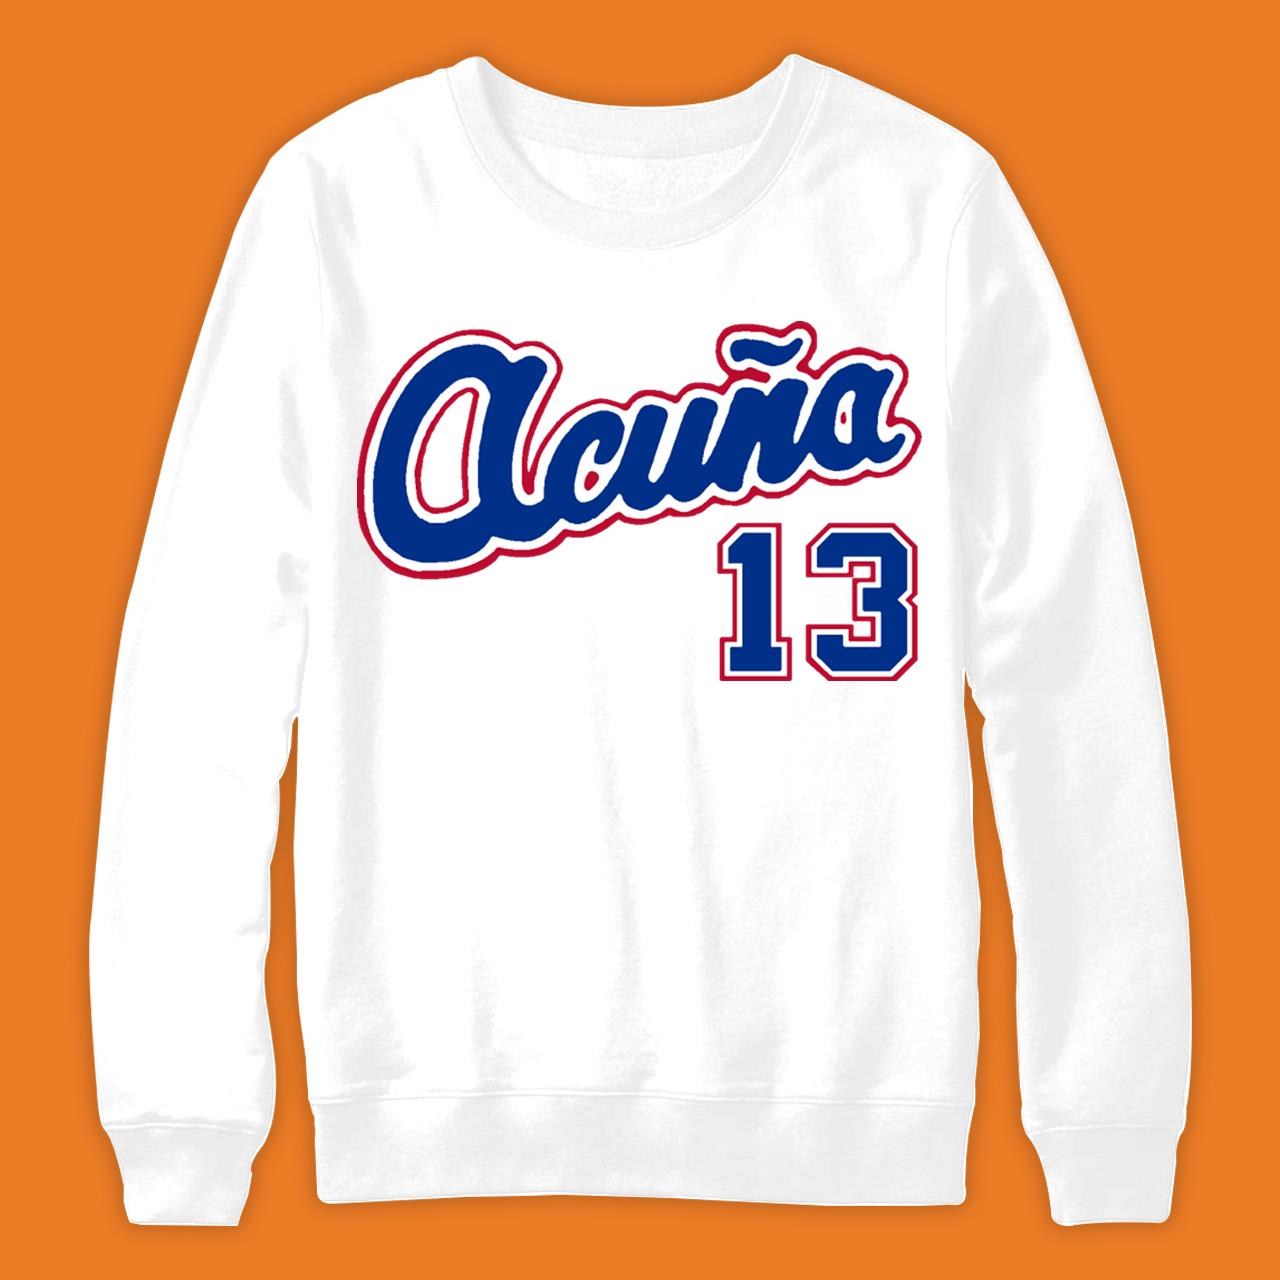 Acuna 13 Vintage T-Shirt